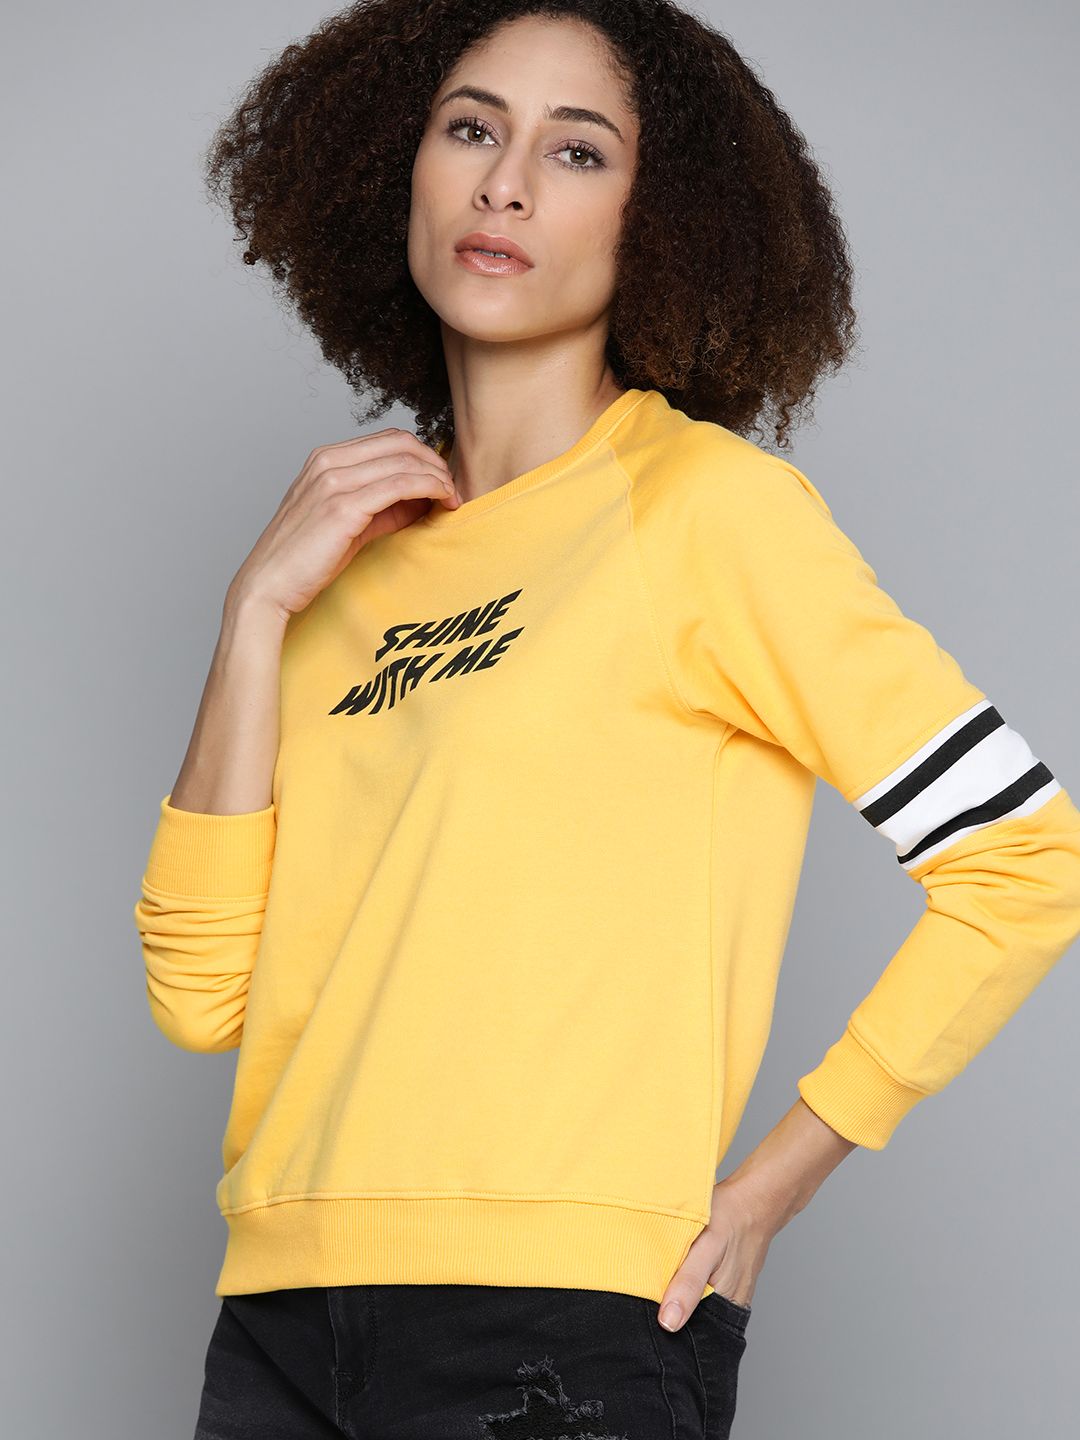 Kook N Keech Women Yellow Printed Sweatshirt Price in India